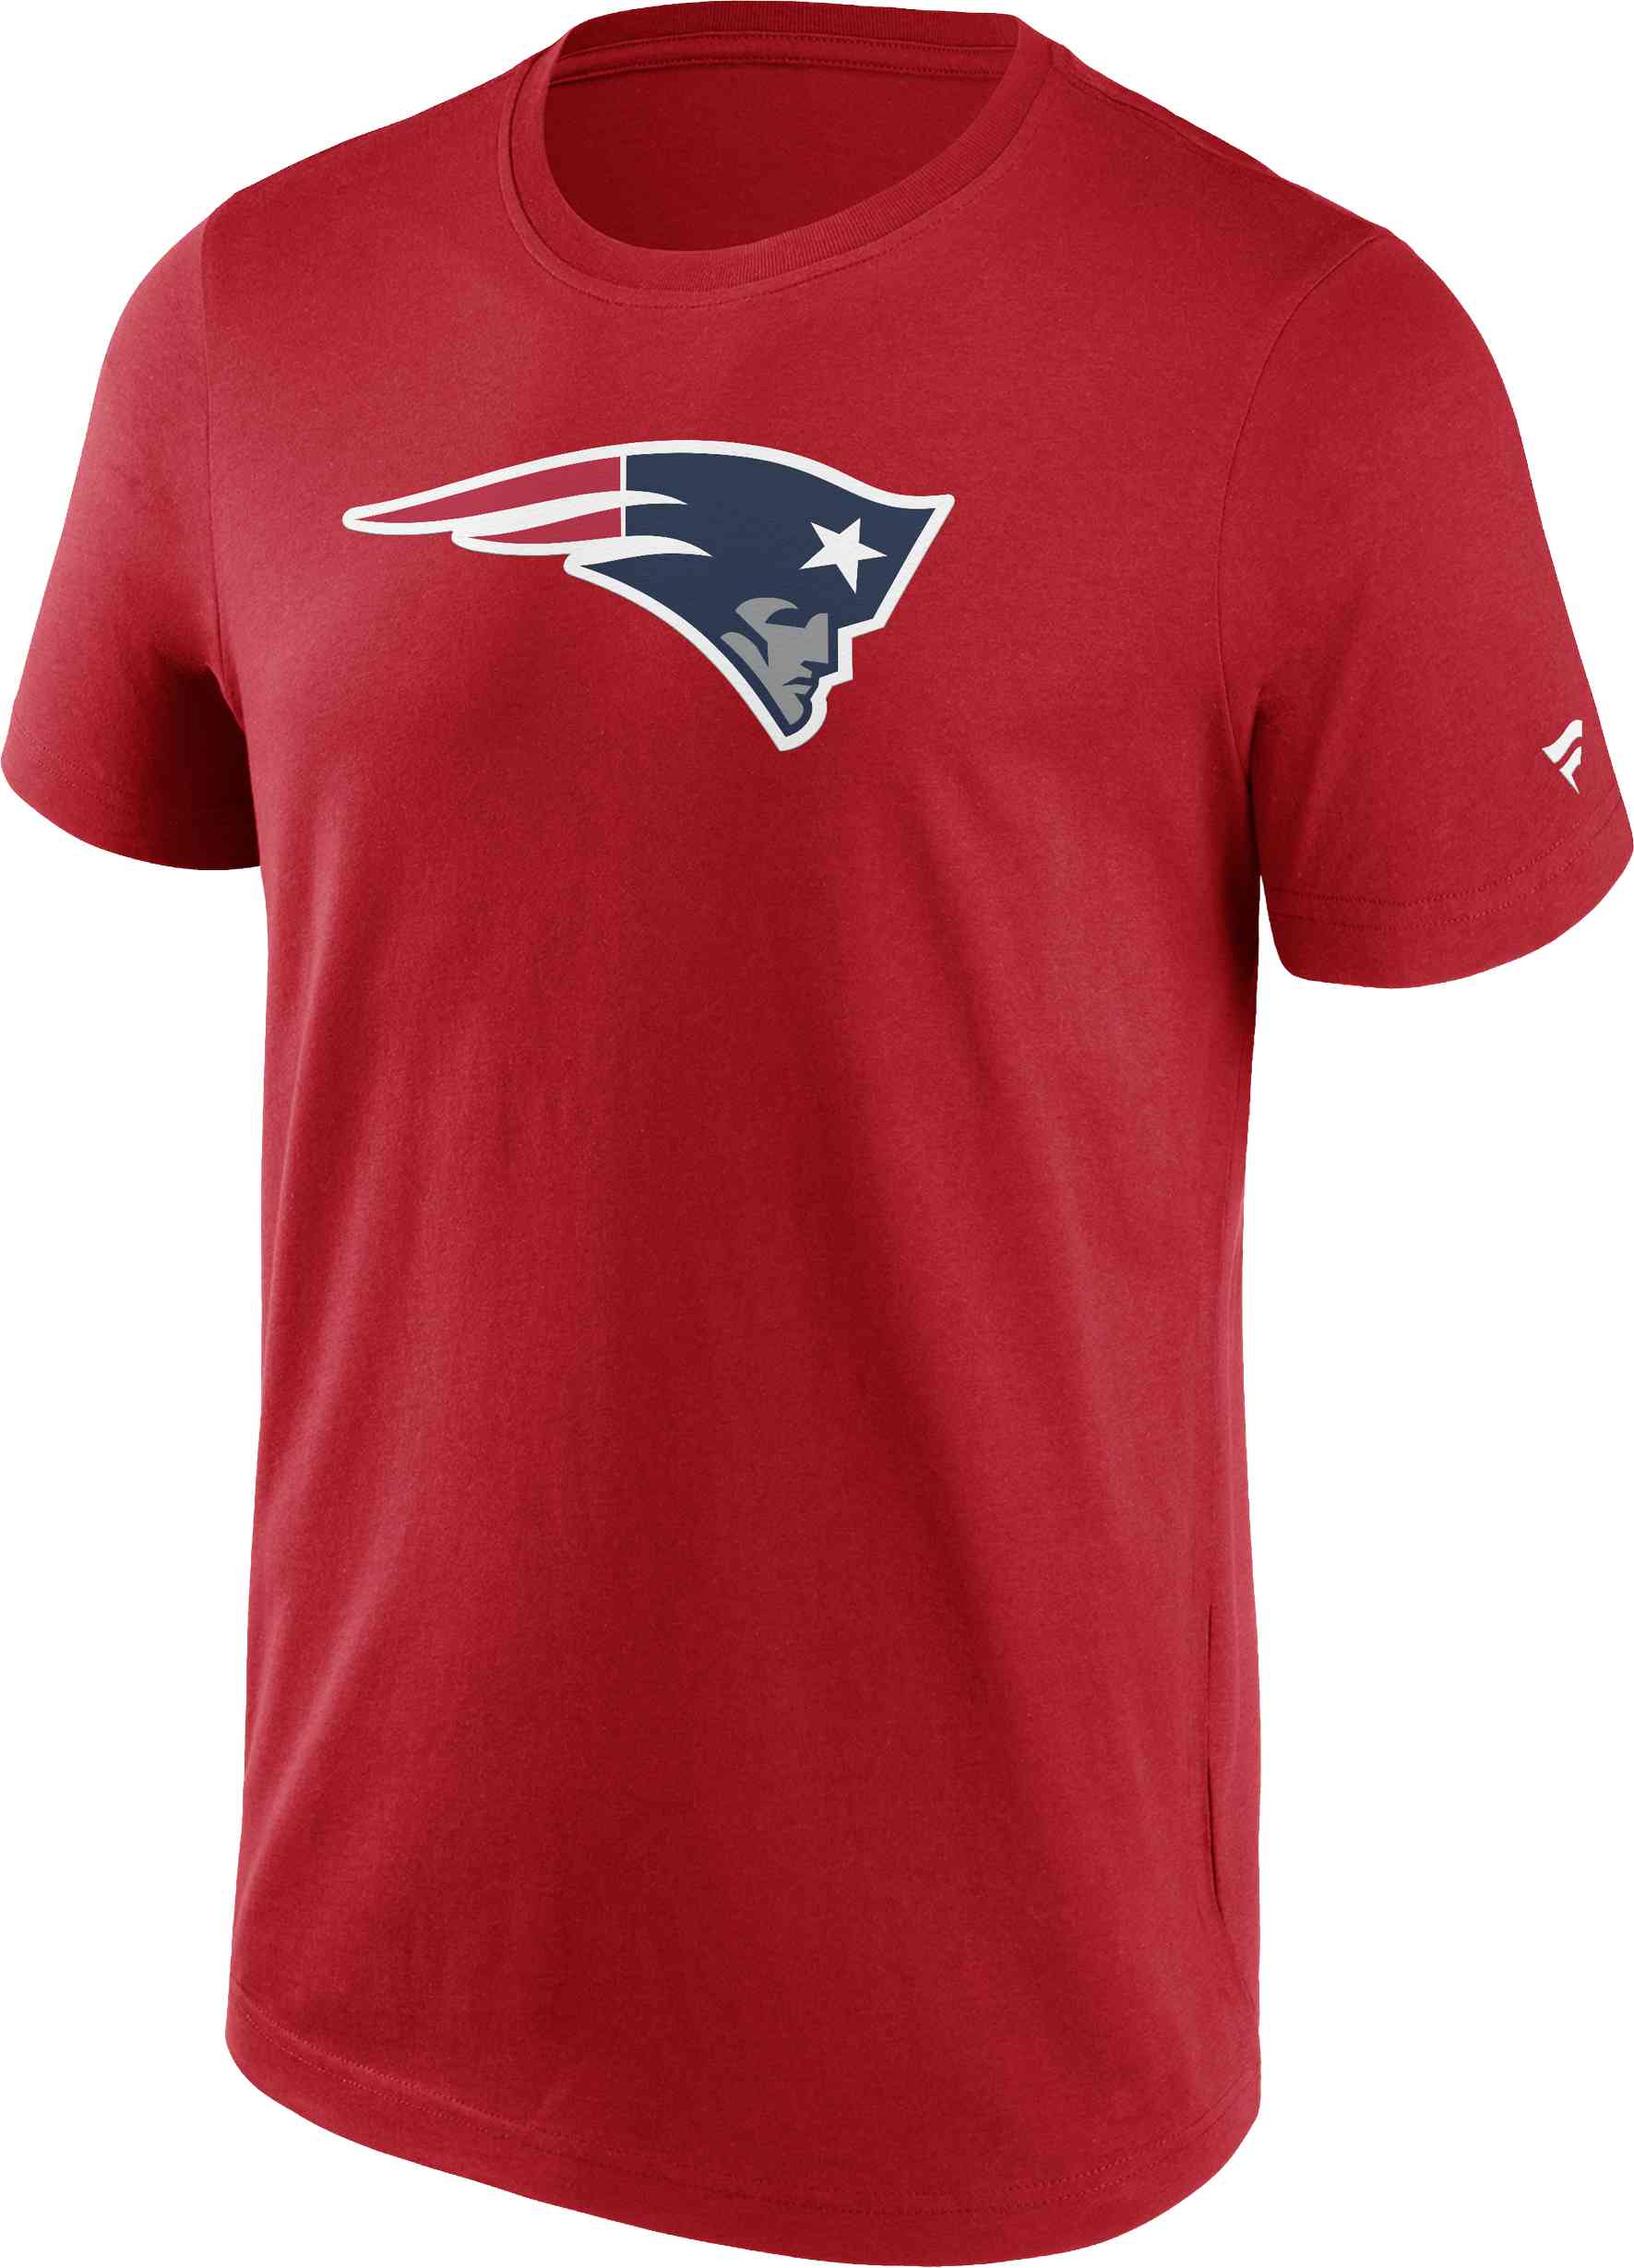 Fanatics - NFL New England Patriots Primary Logo Graphic T-Shirt